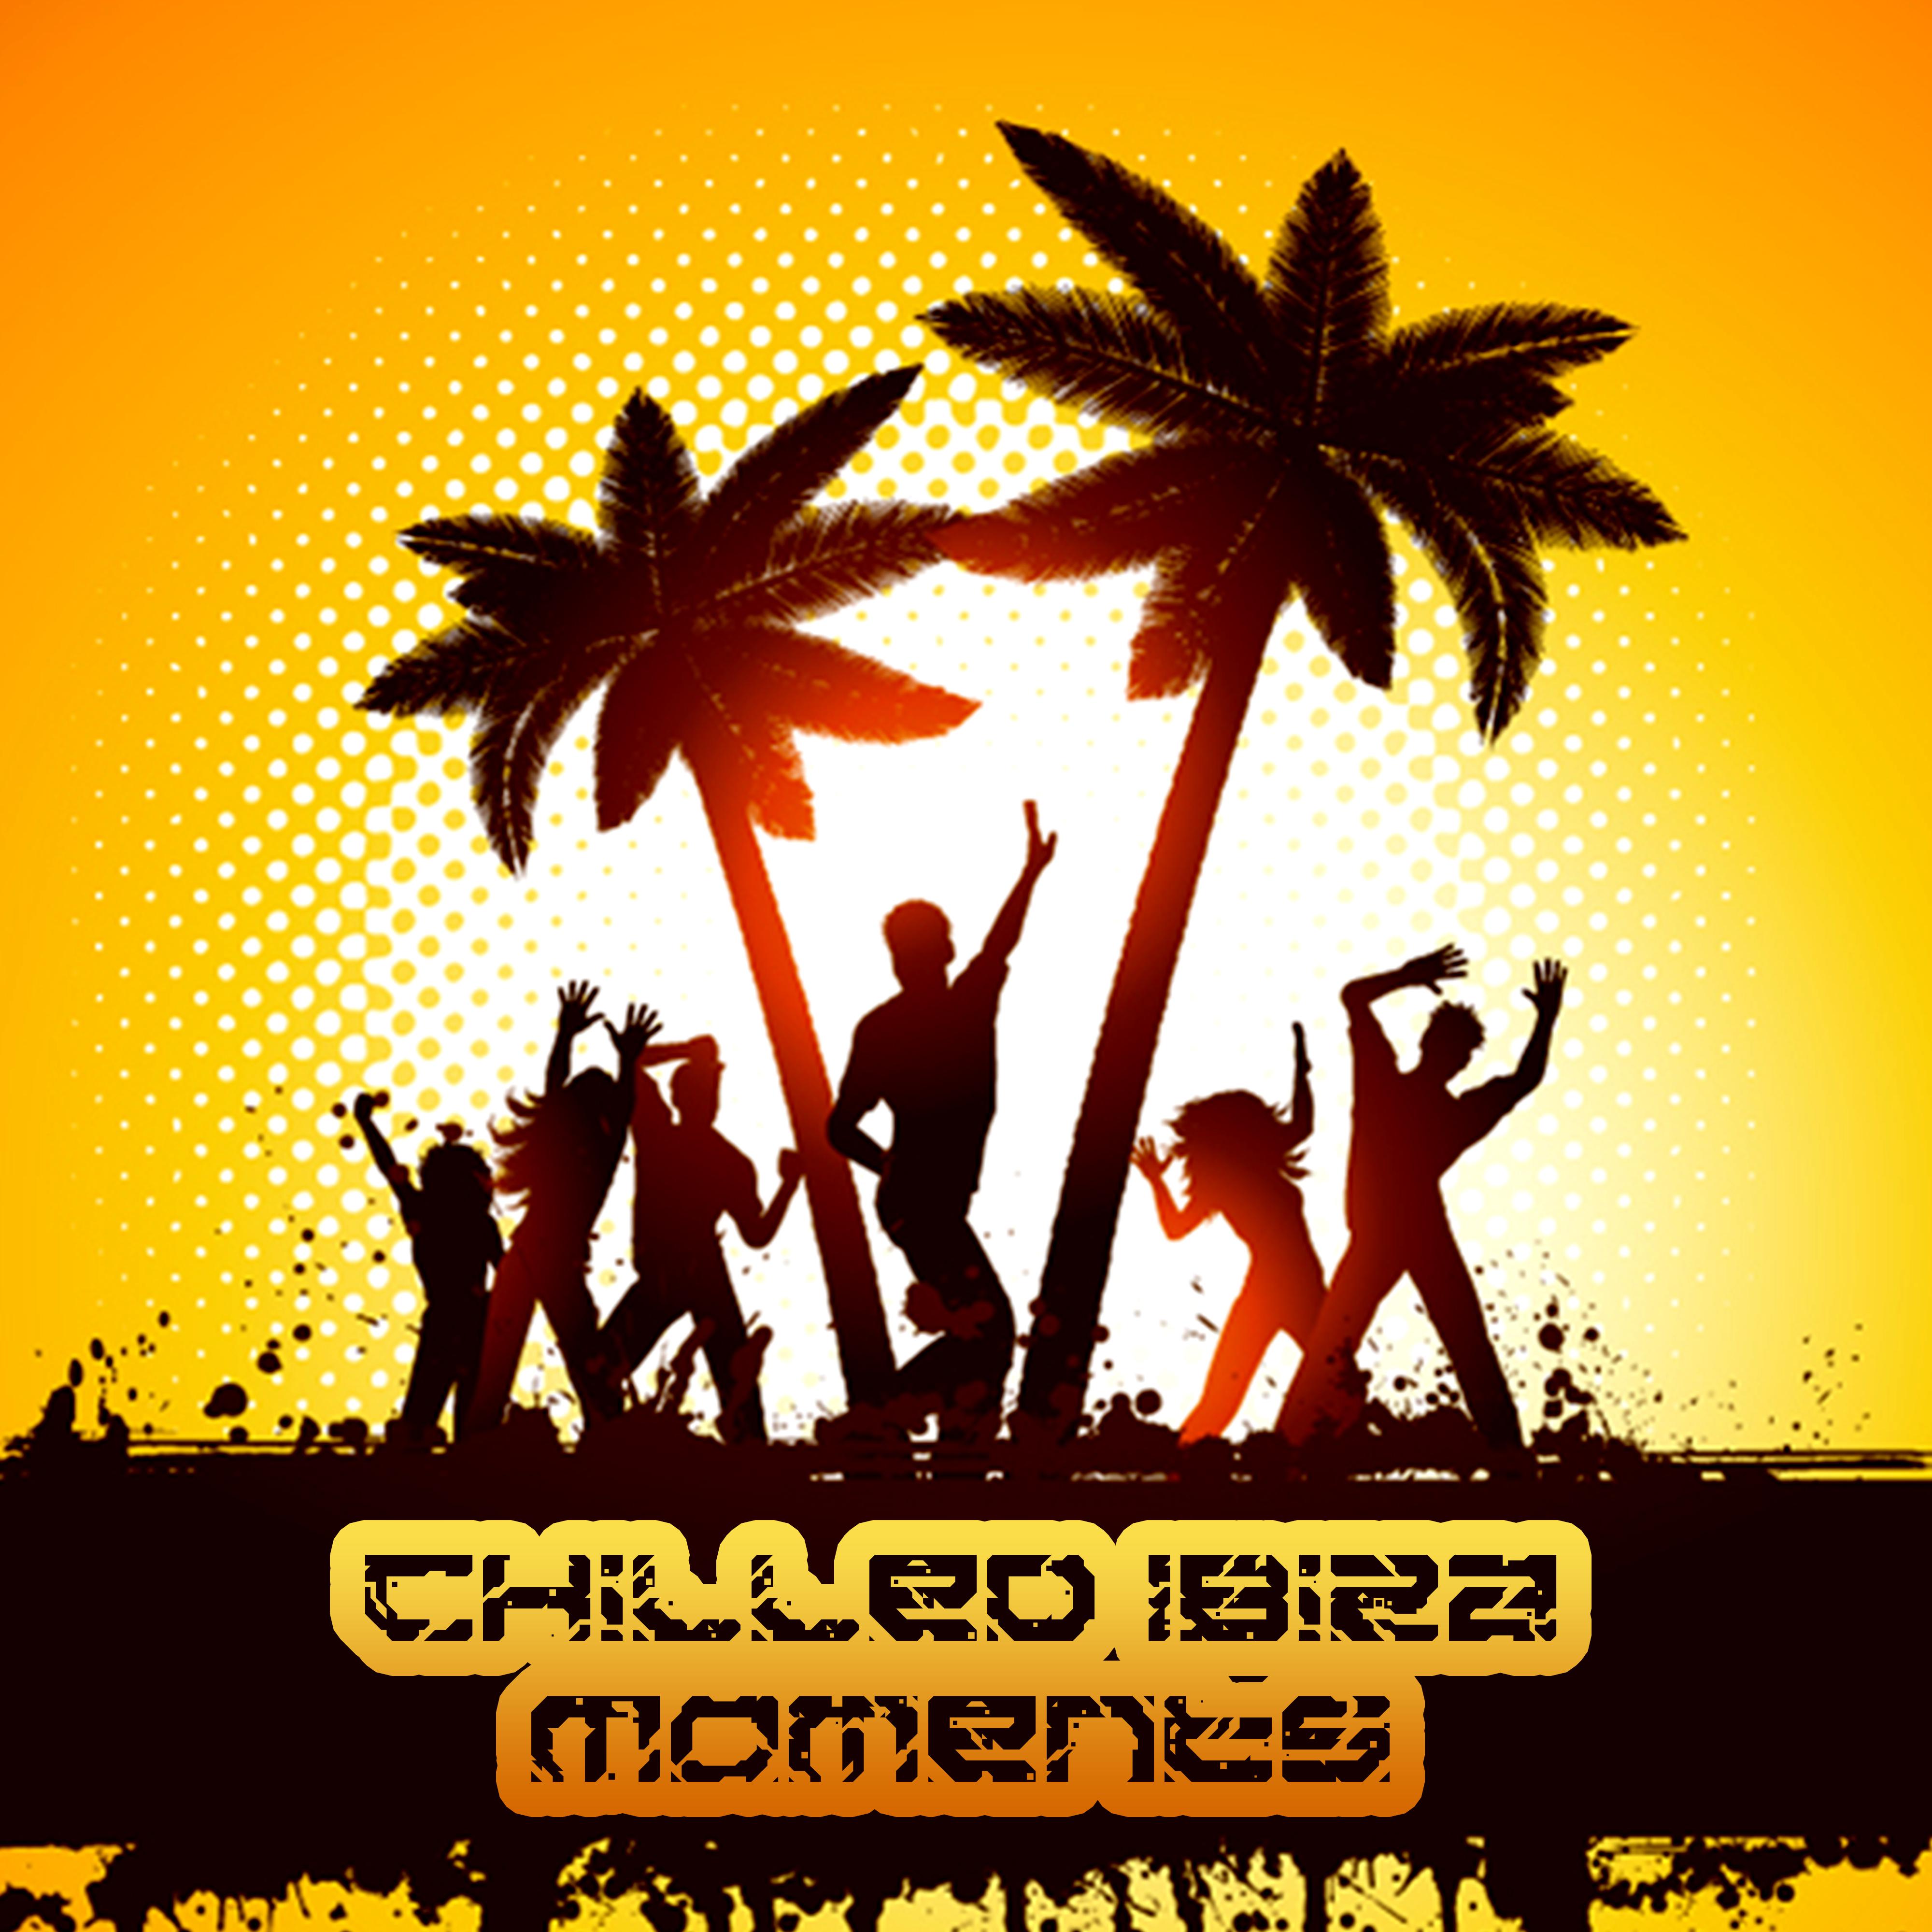 Chilled Ibiza Moments